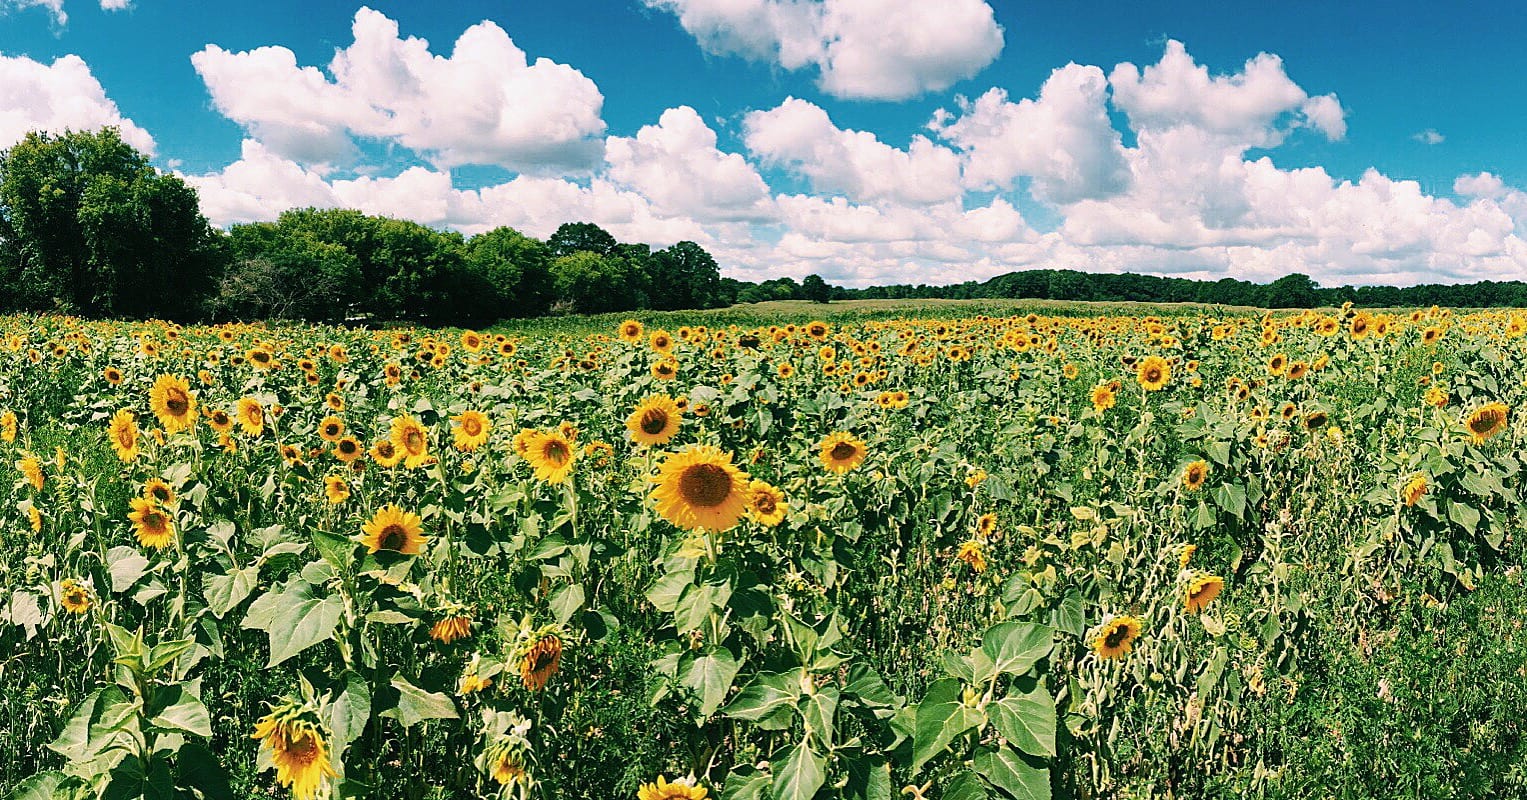 Sunflower Field in Upstate New York